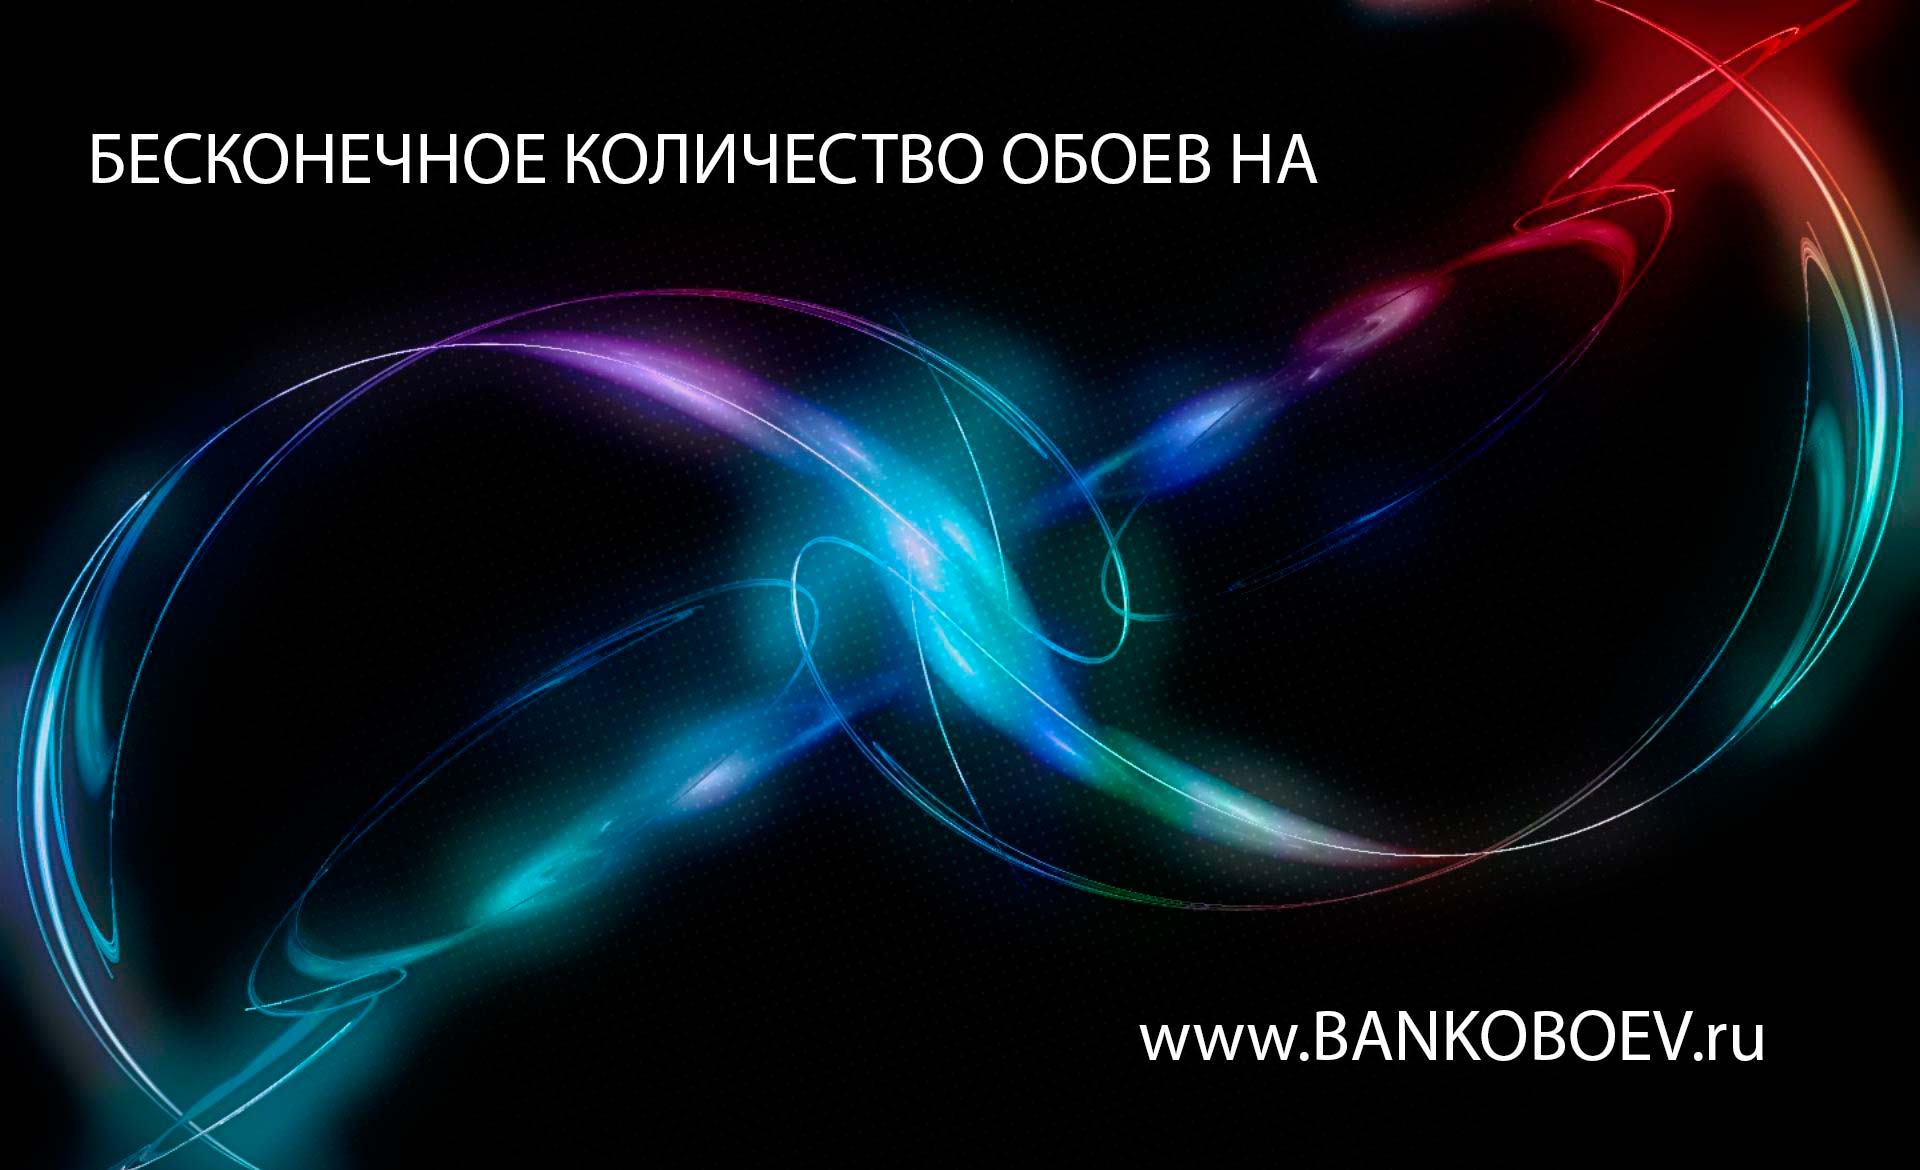 Ru Image Ota4ota Bankoboev Jpg